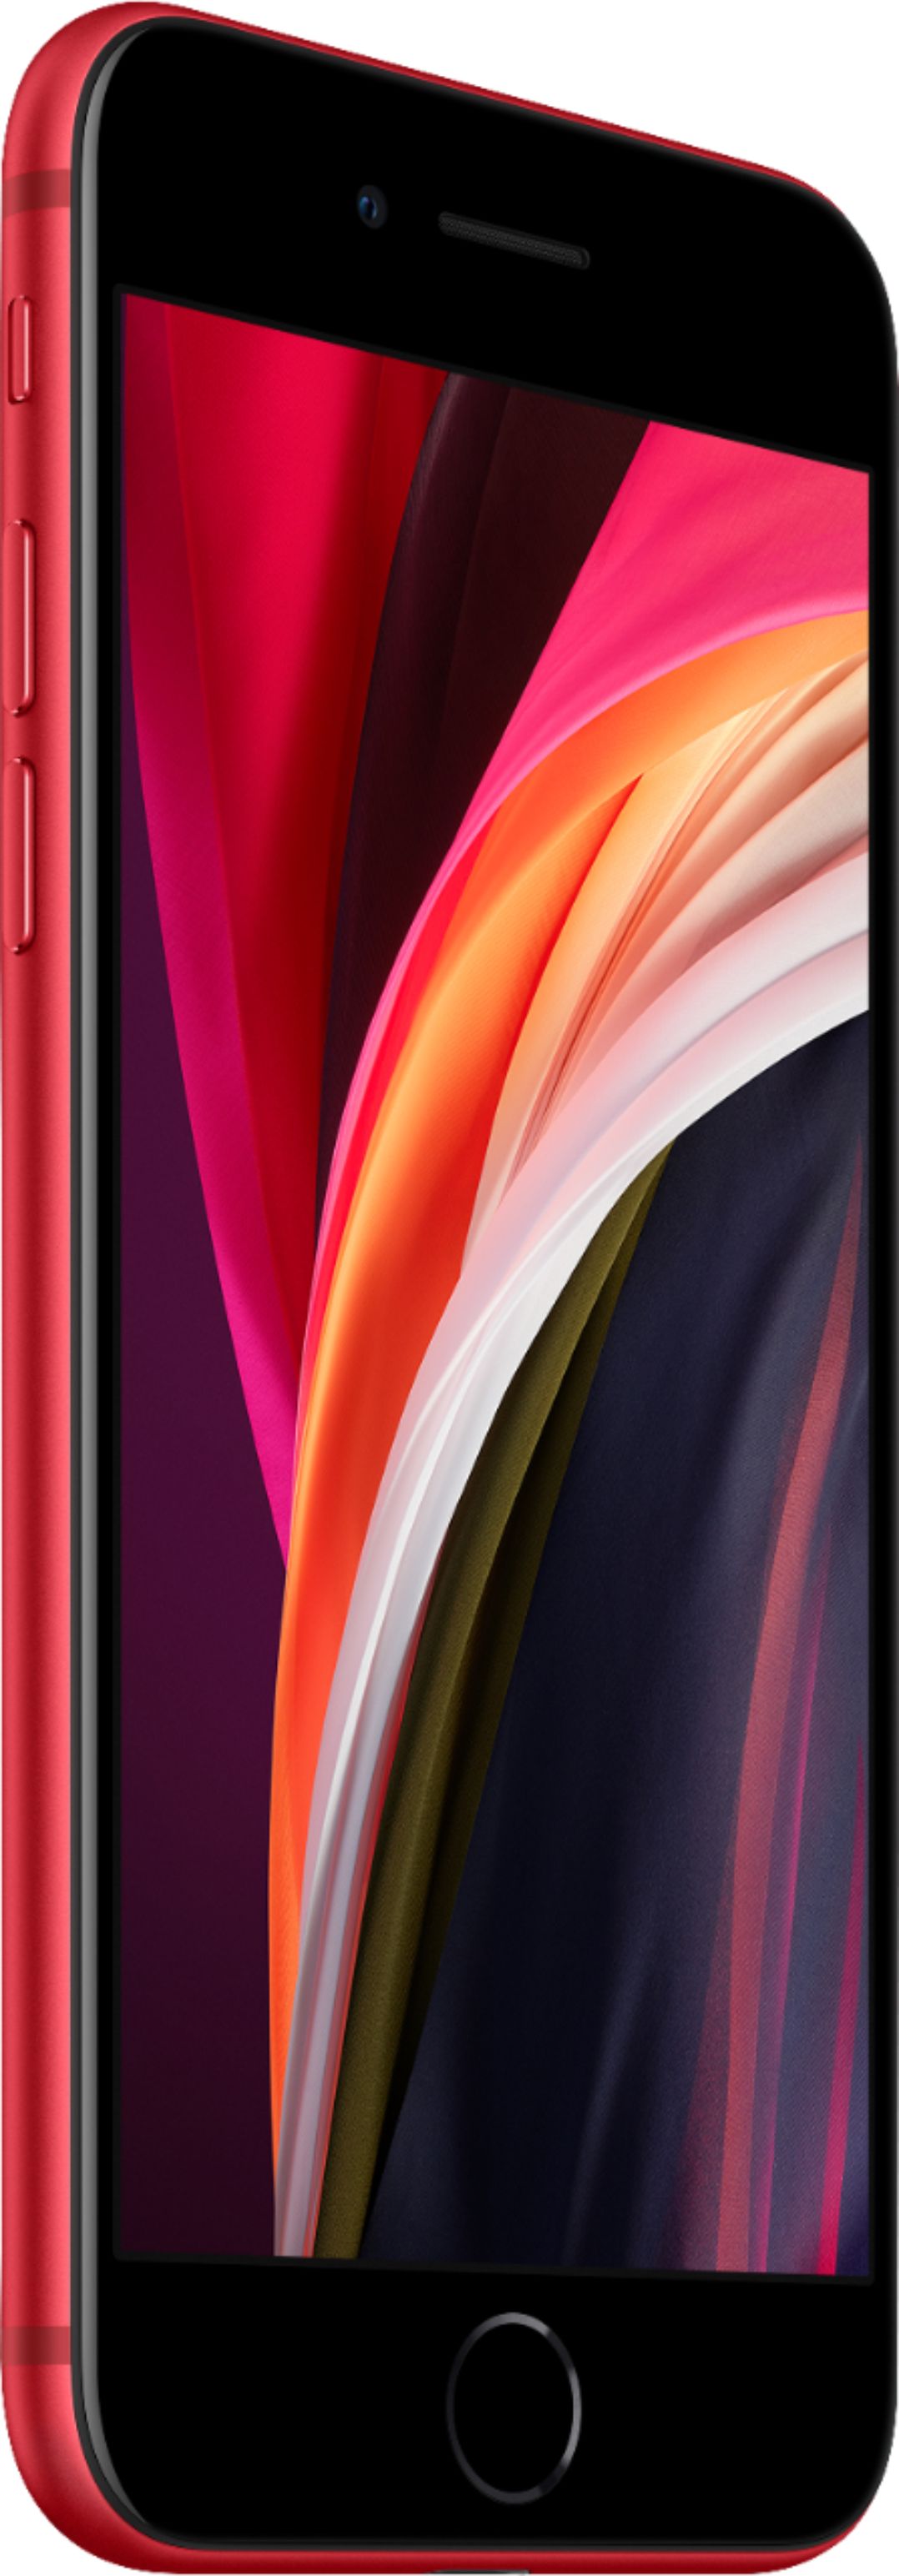 iPhone SE (2022) 128GB - Red - Unlocked